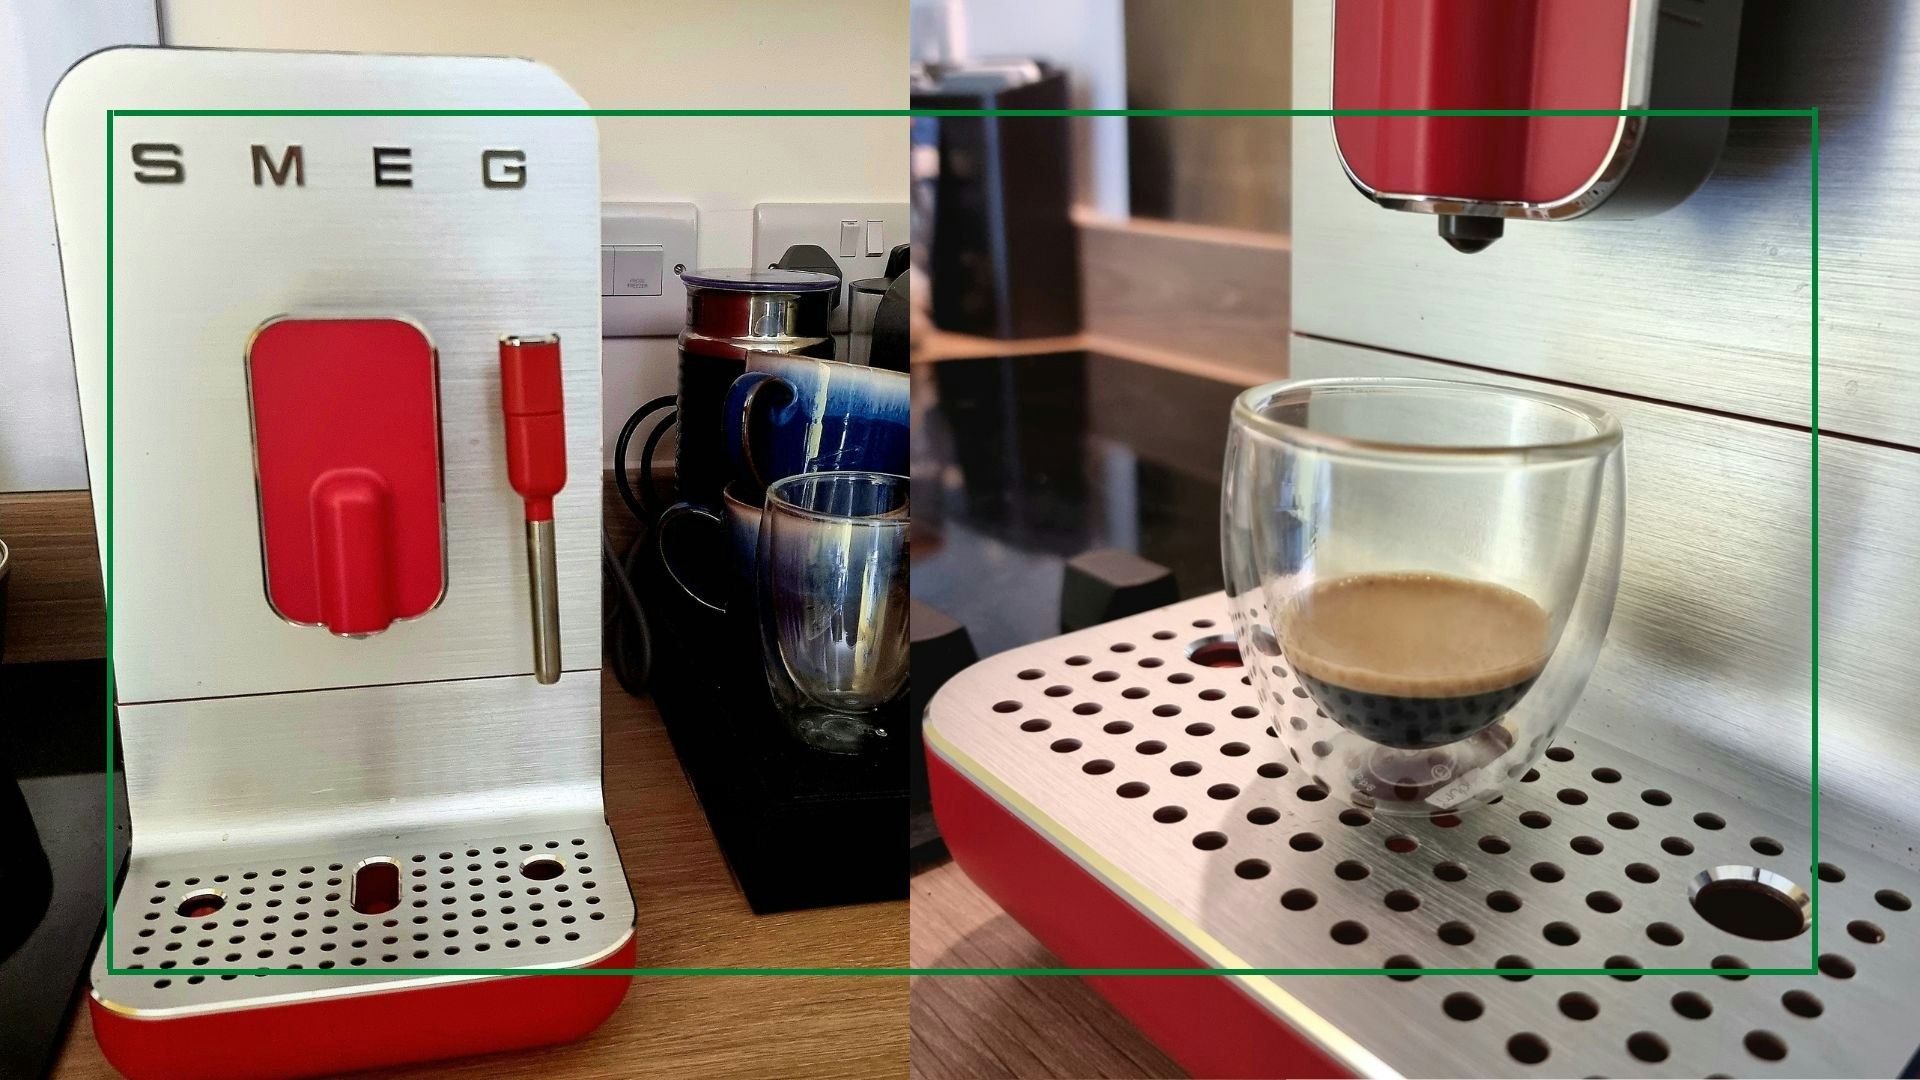 SMEG Manual Espresso Coffee Machine with Grinder, Retro Style